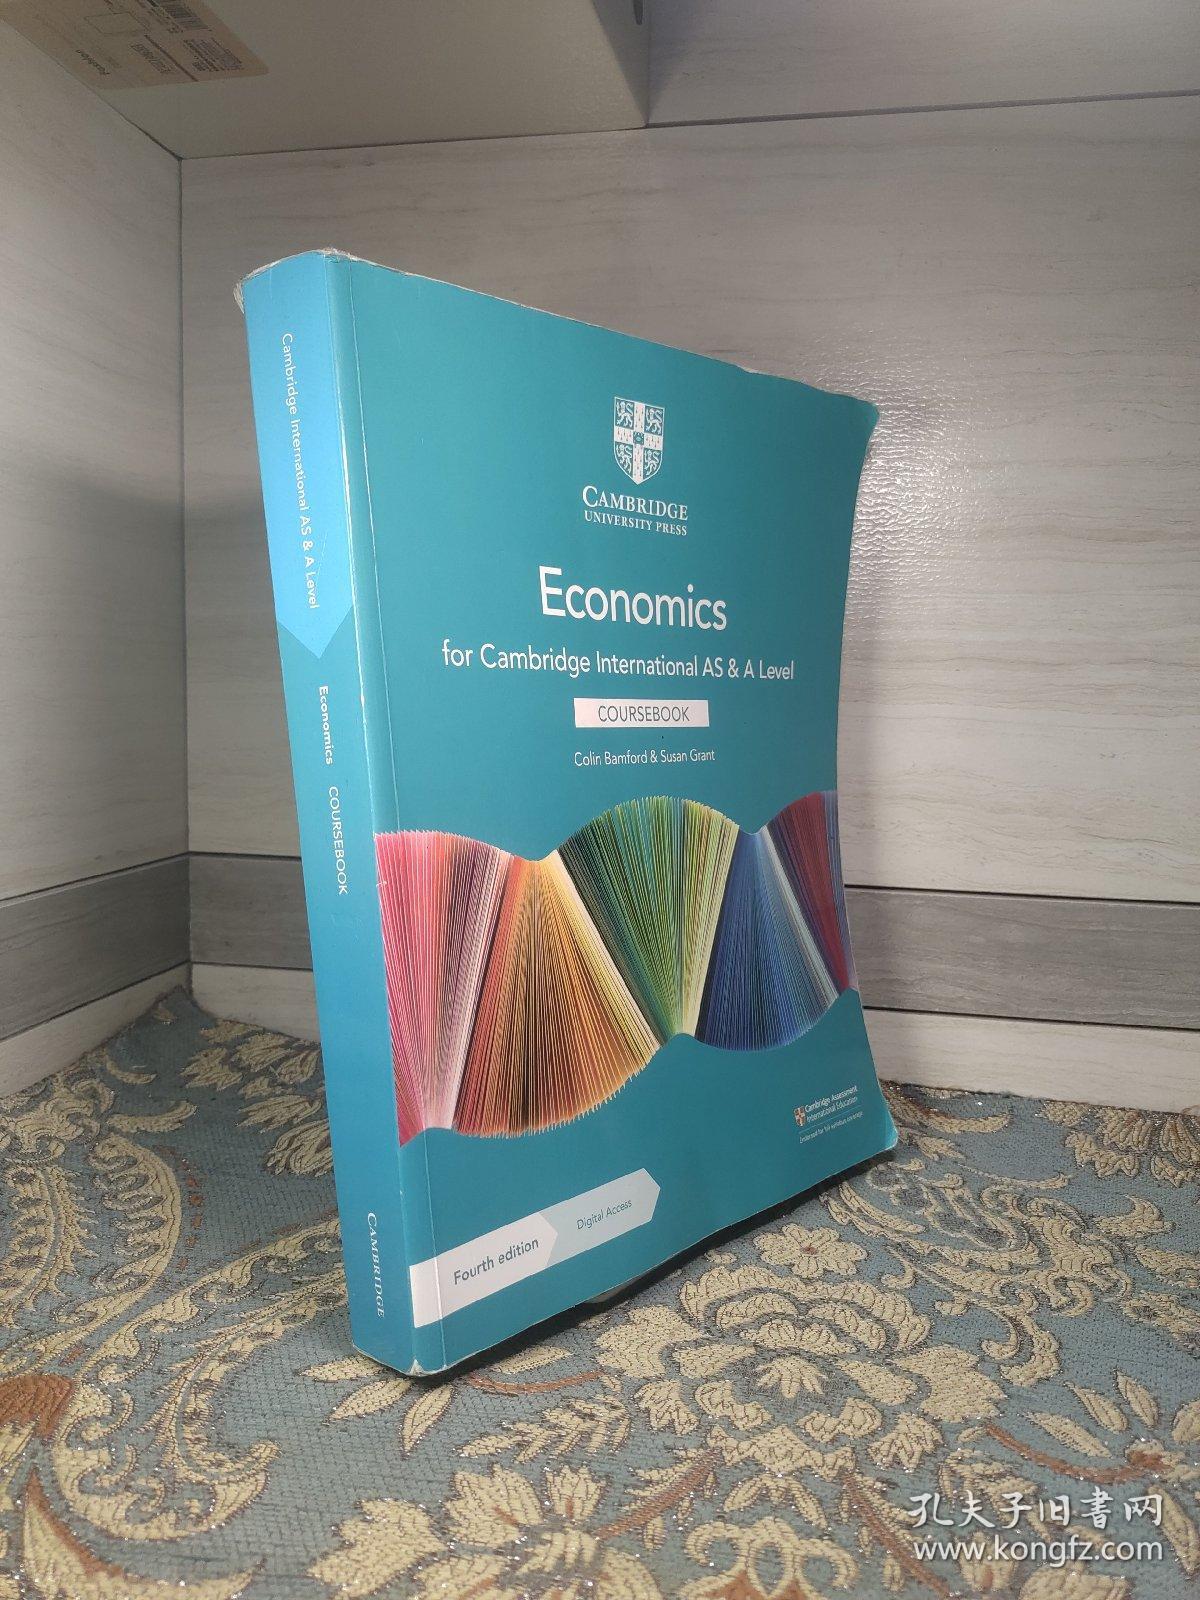 Economics for Cambridge lnternational AS & A Level Coursebook